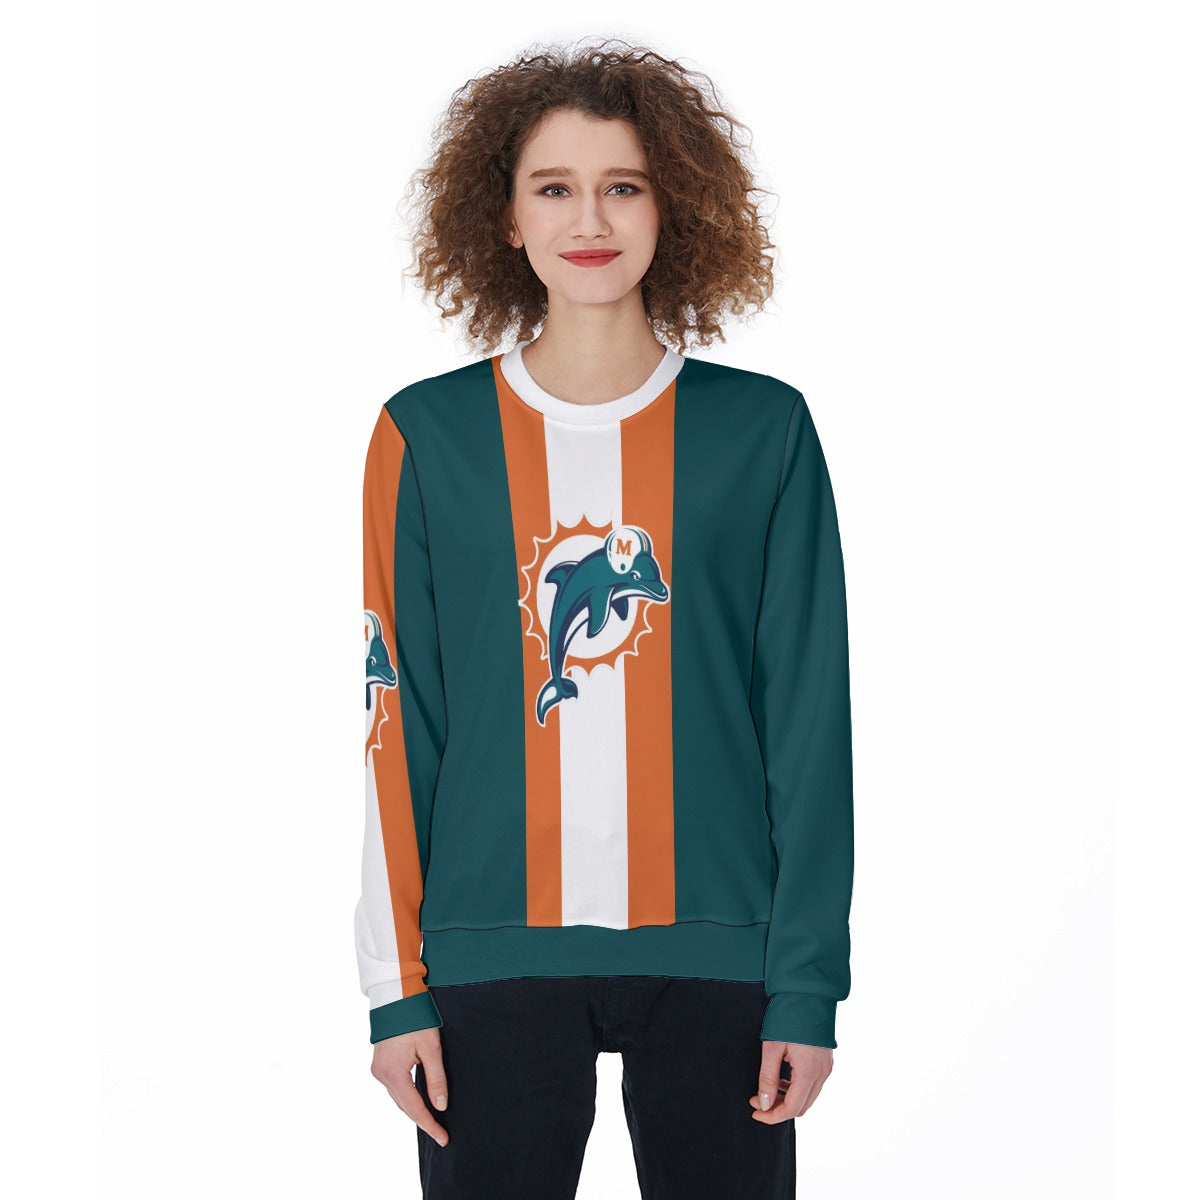 Miami Dolphins All-Over Print Women's Heavy Fleece Sweatshirt